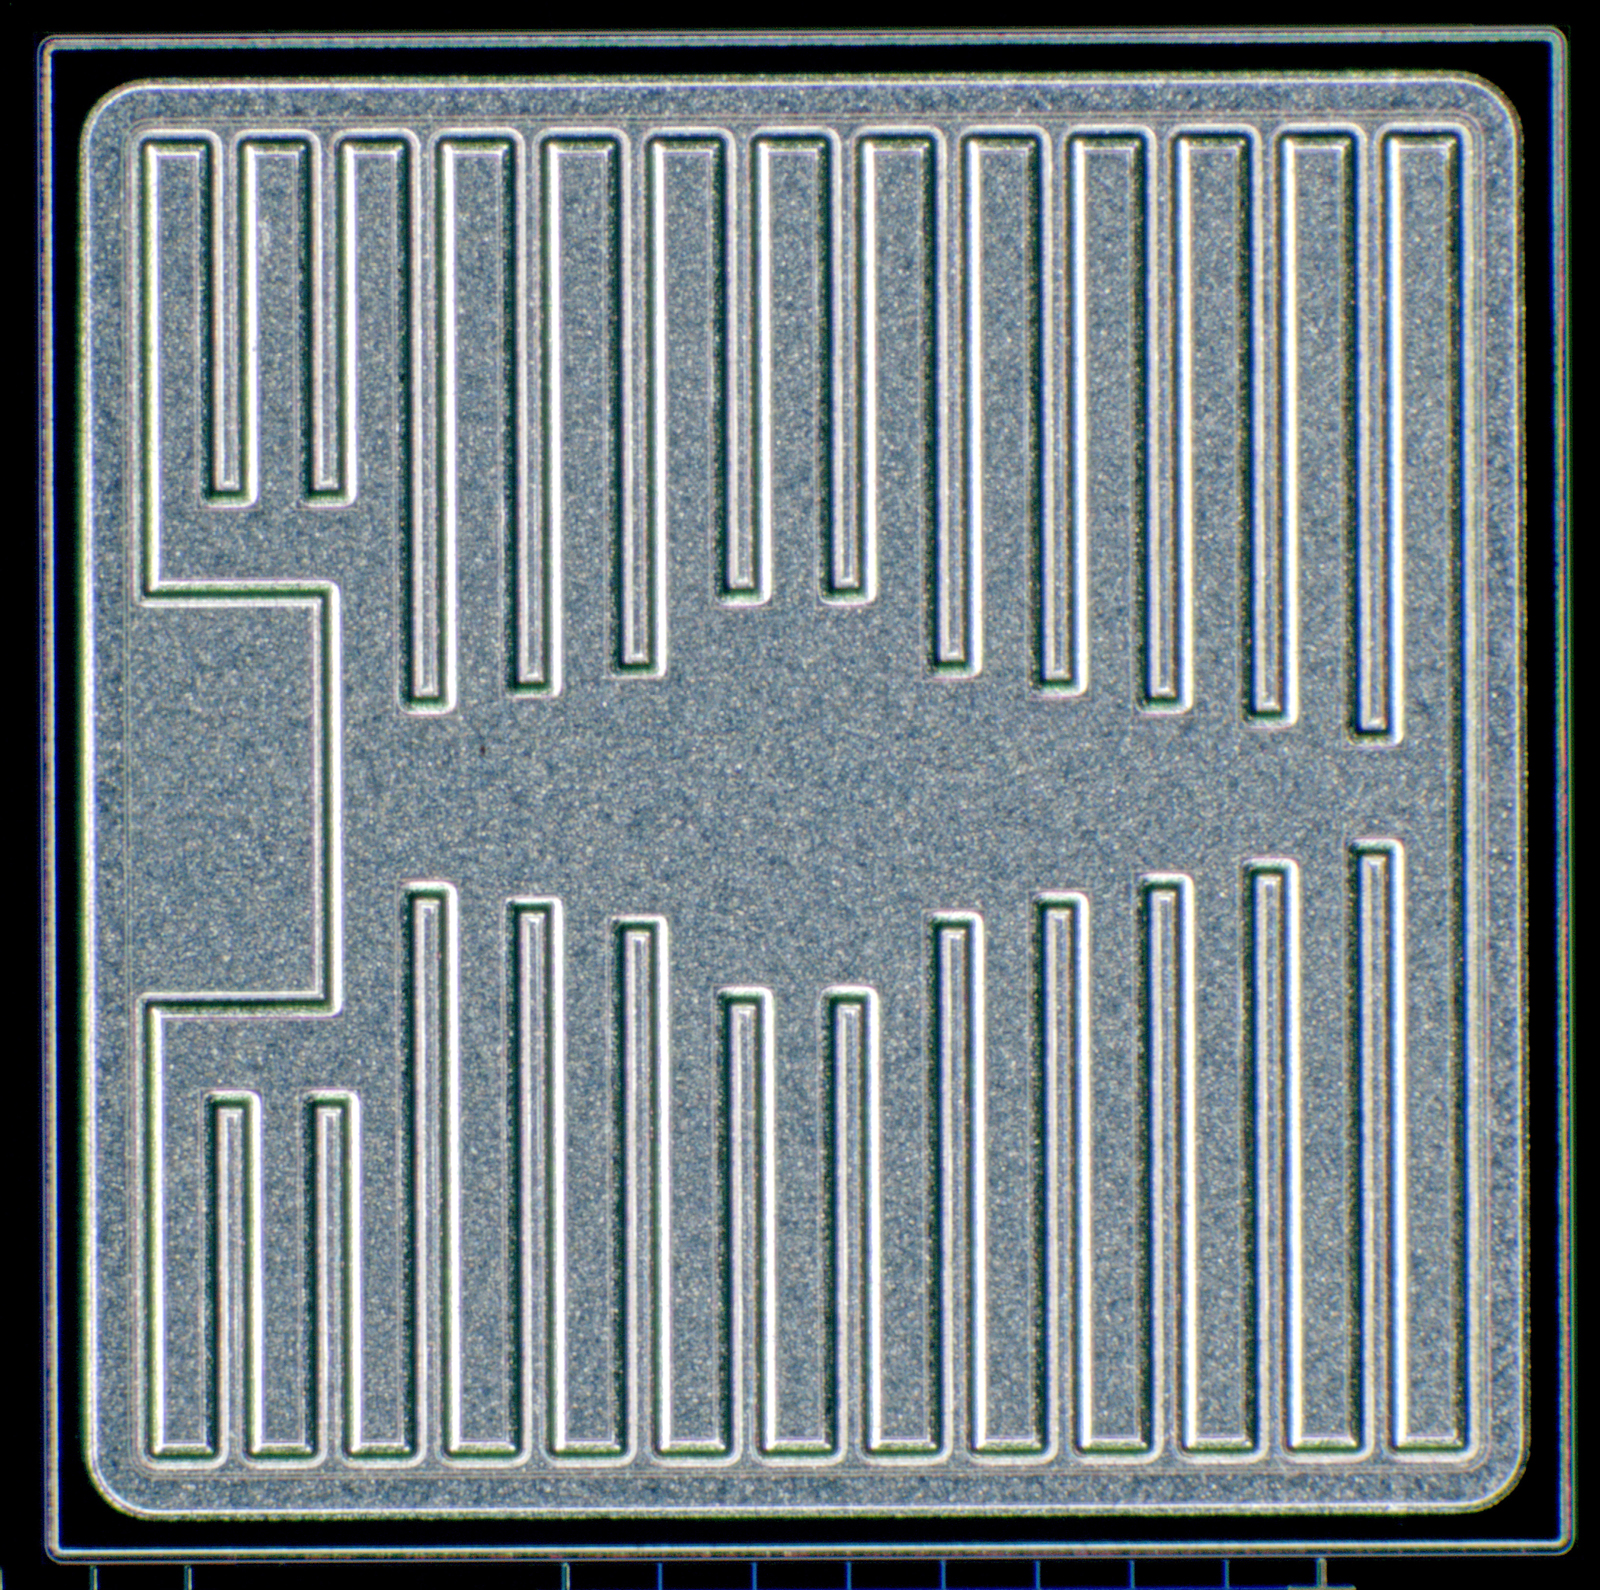 bercovici:zetex:transistor3:mz.jpg